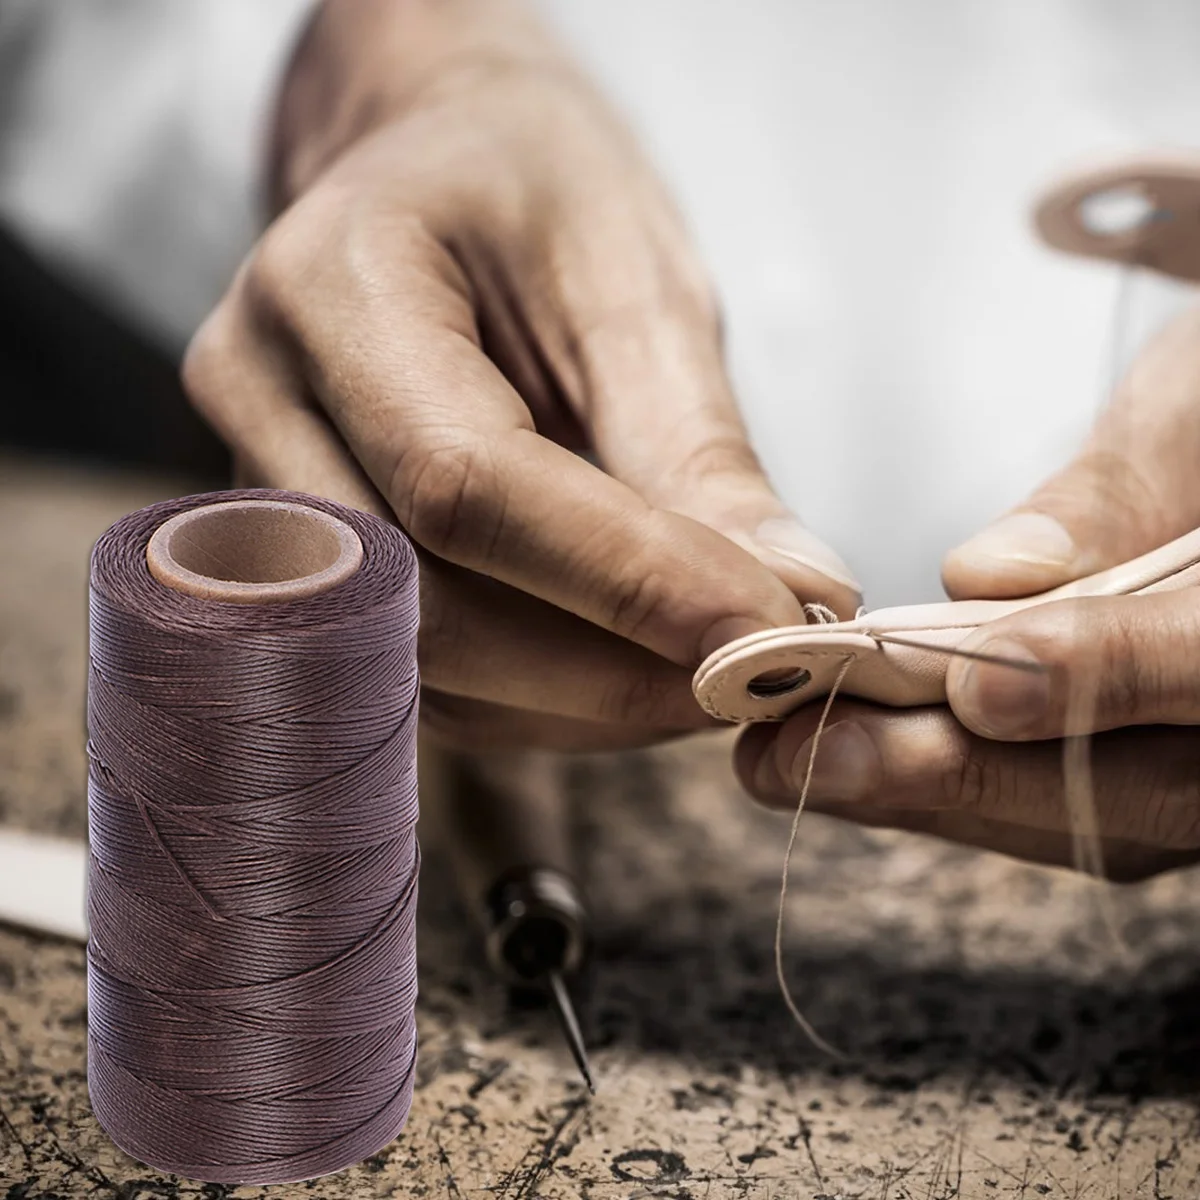 Купи Waxed Threadflat Cordhand Sewing Wax Stitching Work Heavy Duty Special Line за 623 рублей в магазине AliExpress